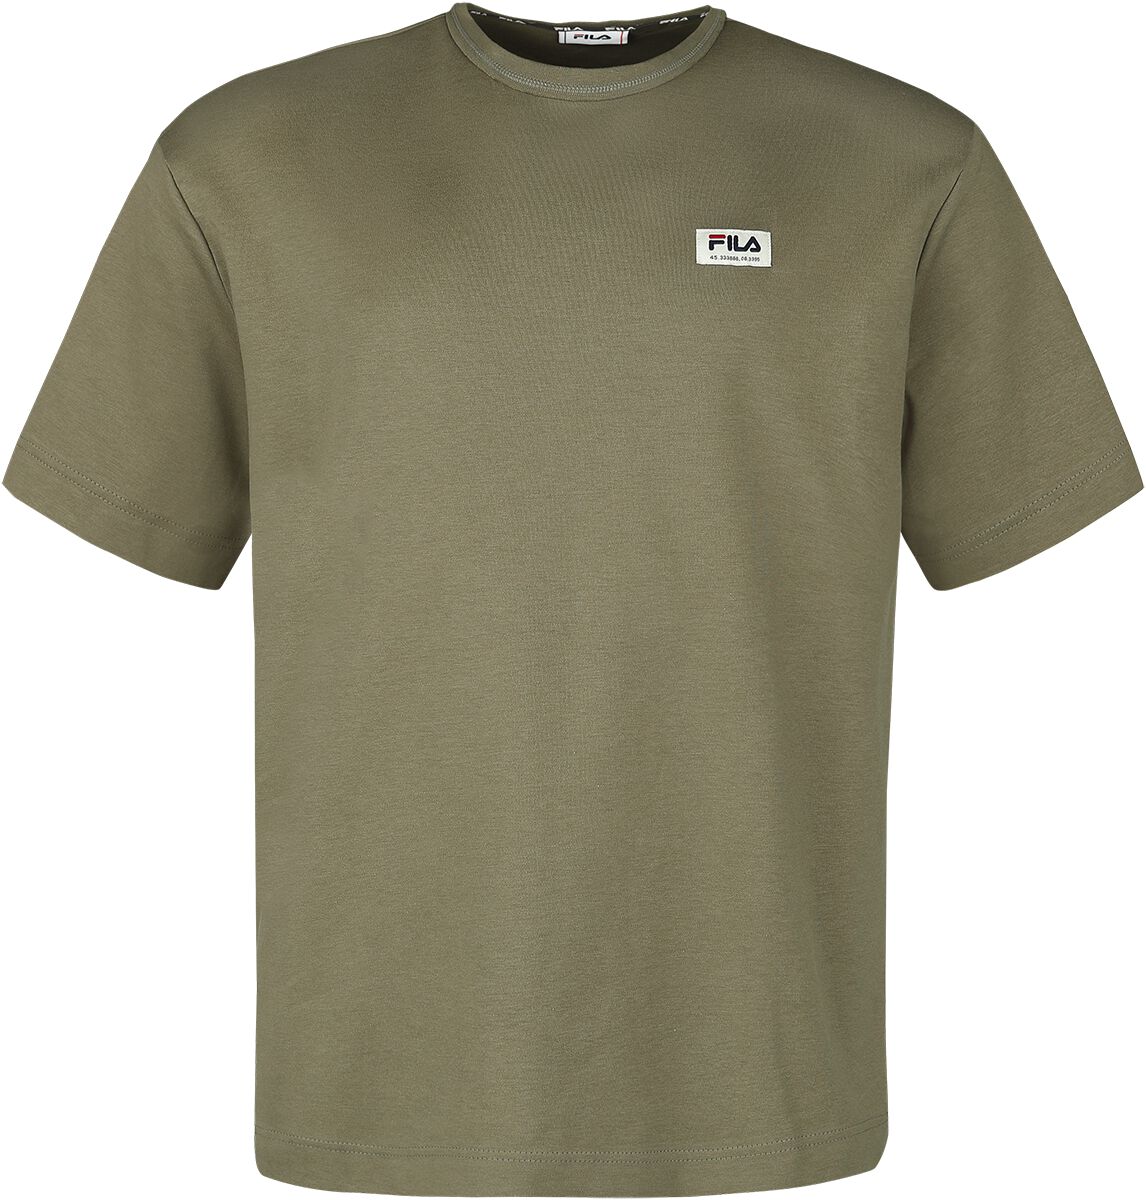 Fila TAIPAS oversized tee T-Shirt oliv in L